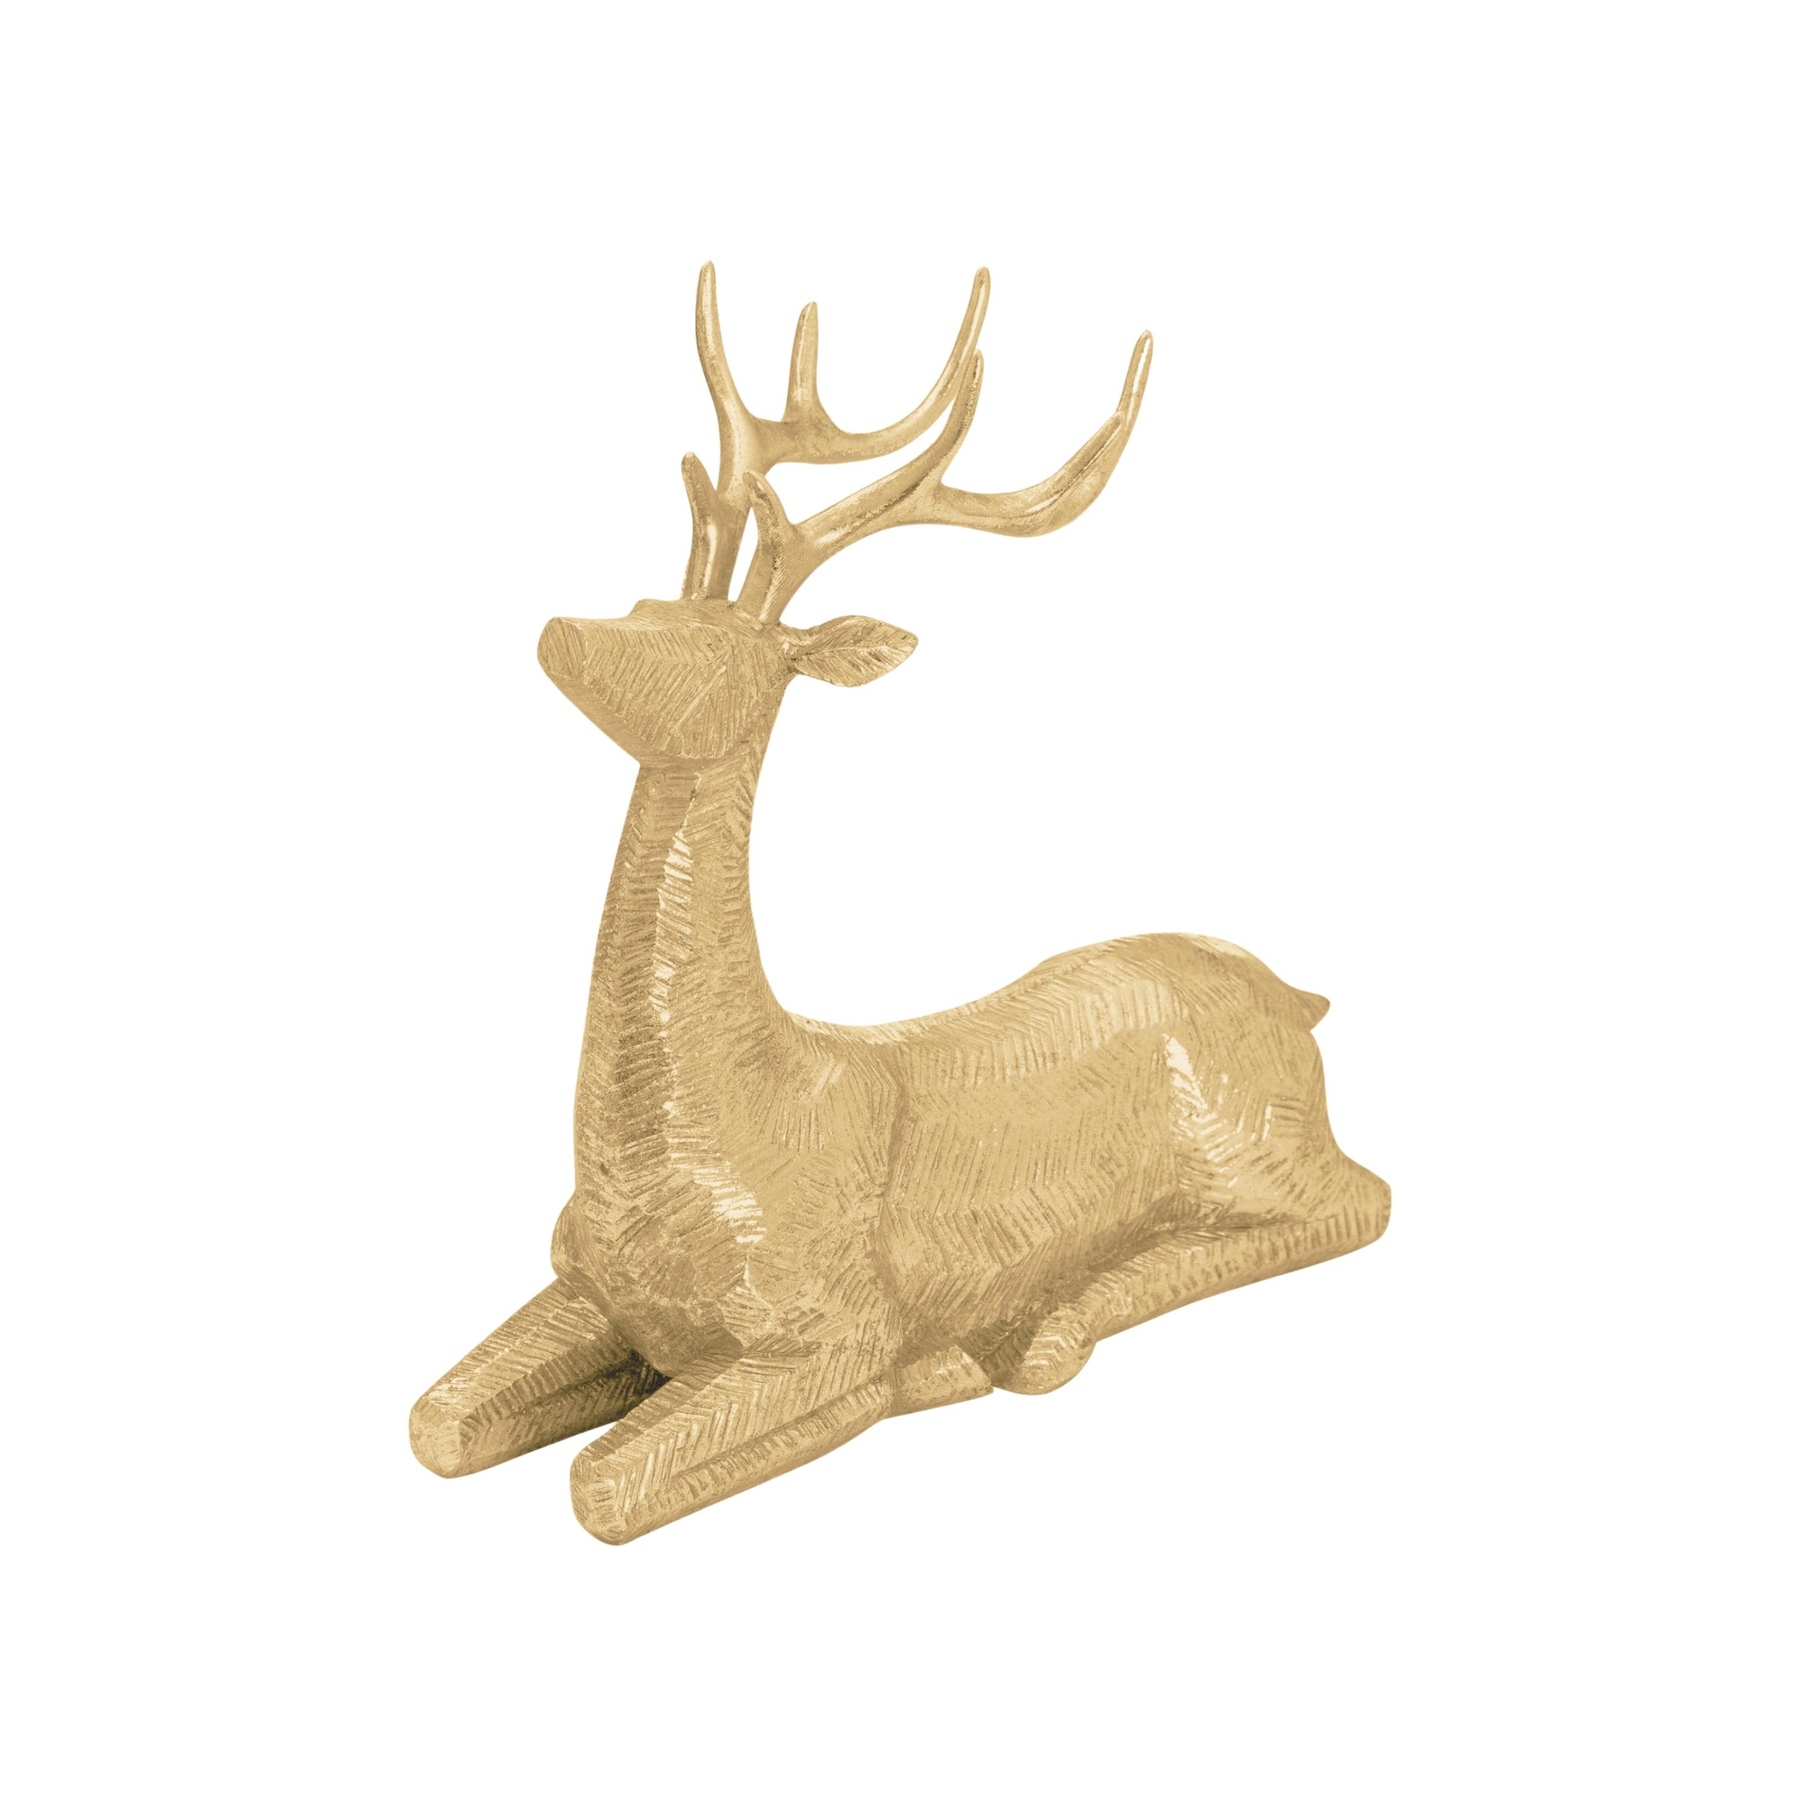 Decorative Wood Effect Sitting Deer - Image 1